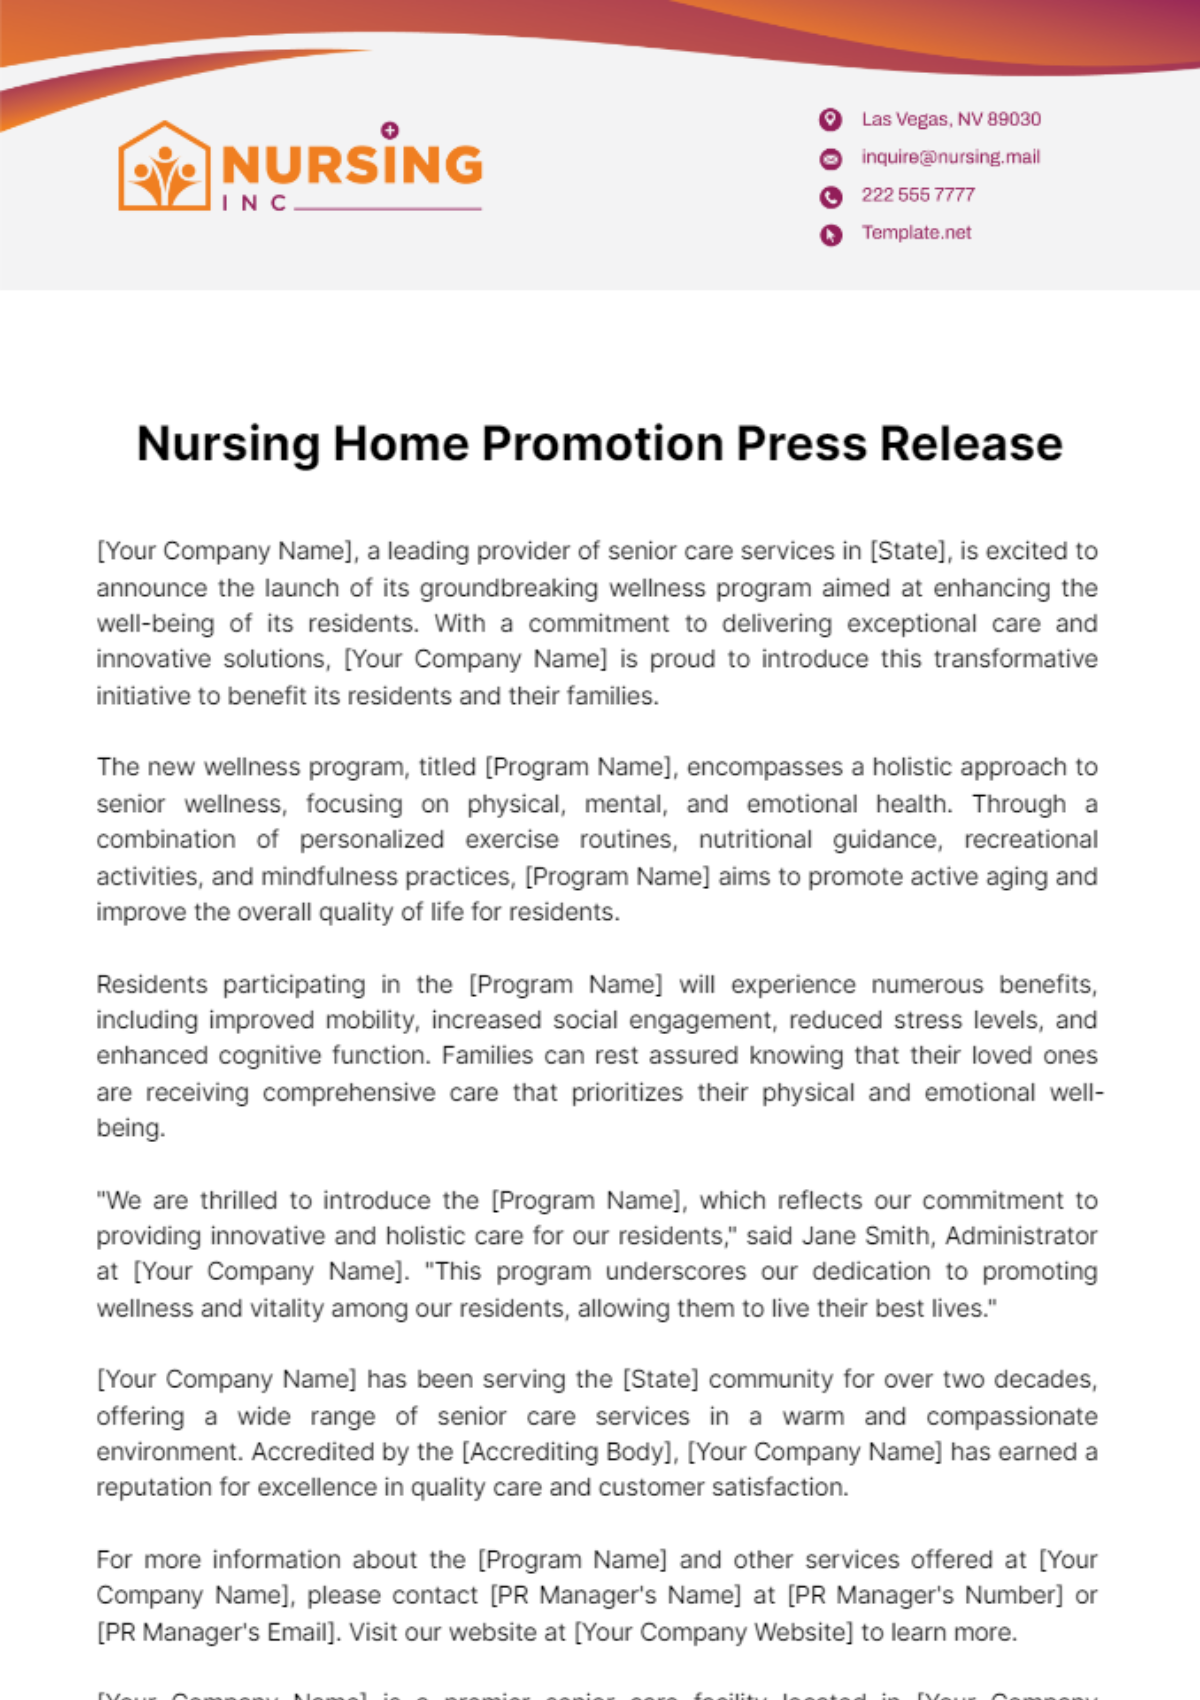 Nursing Home Promotion Press Release Template